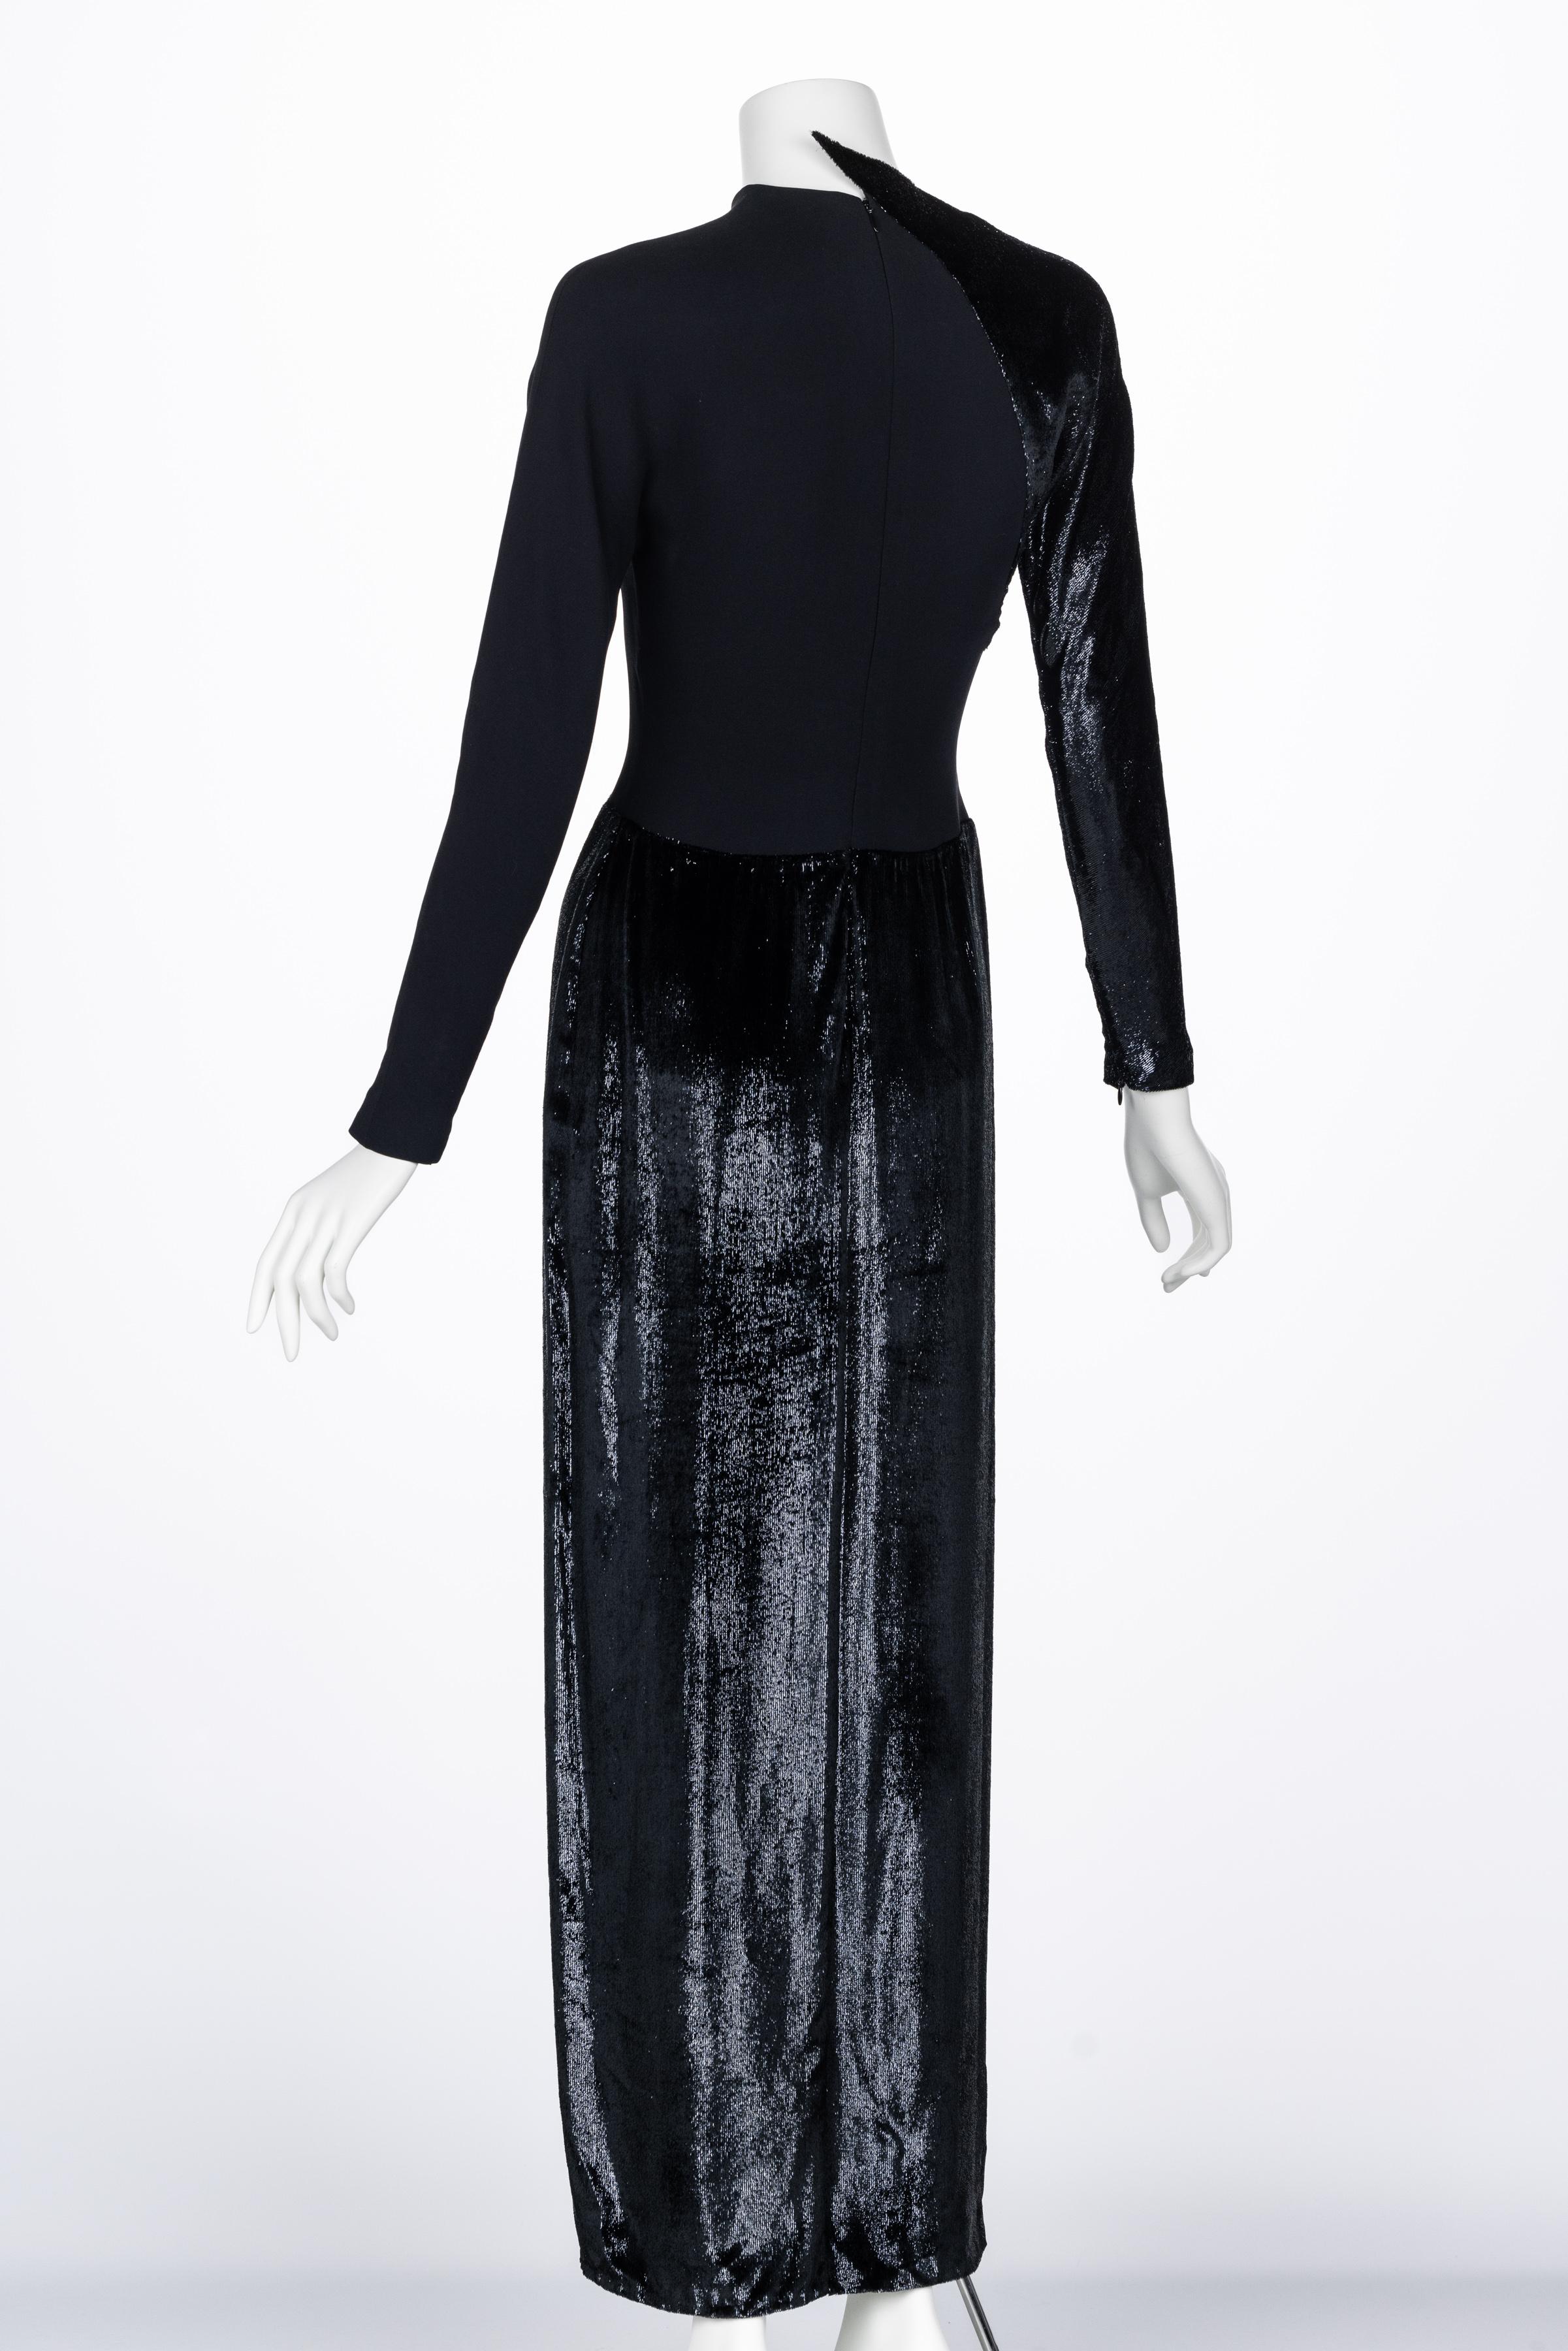 Geoffrey Beene Black Crepe Panne Velvet Dress 1990s For Sale 1